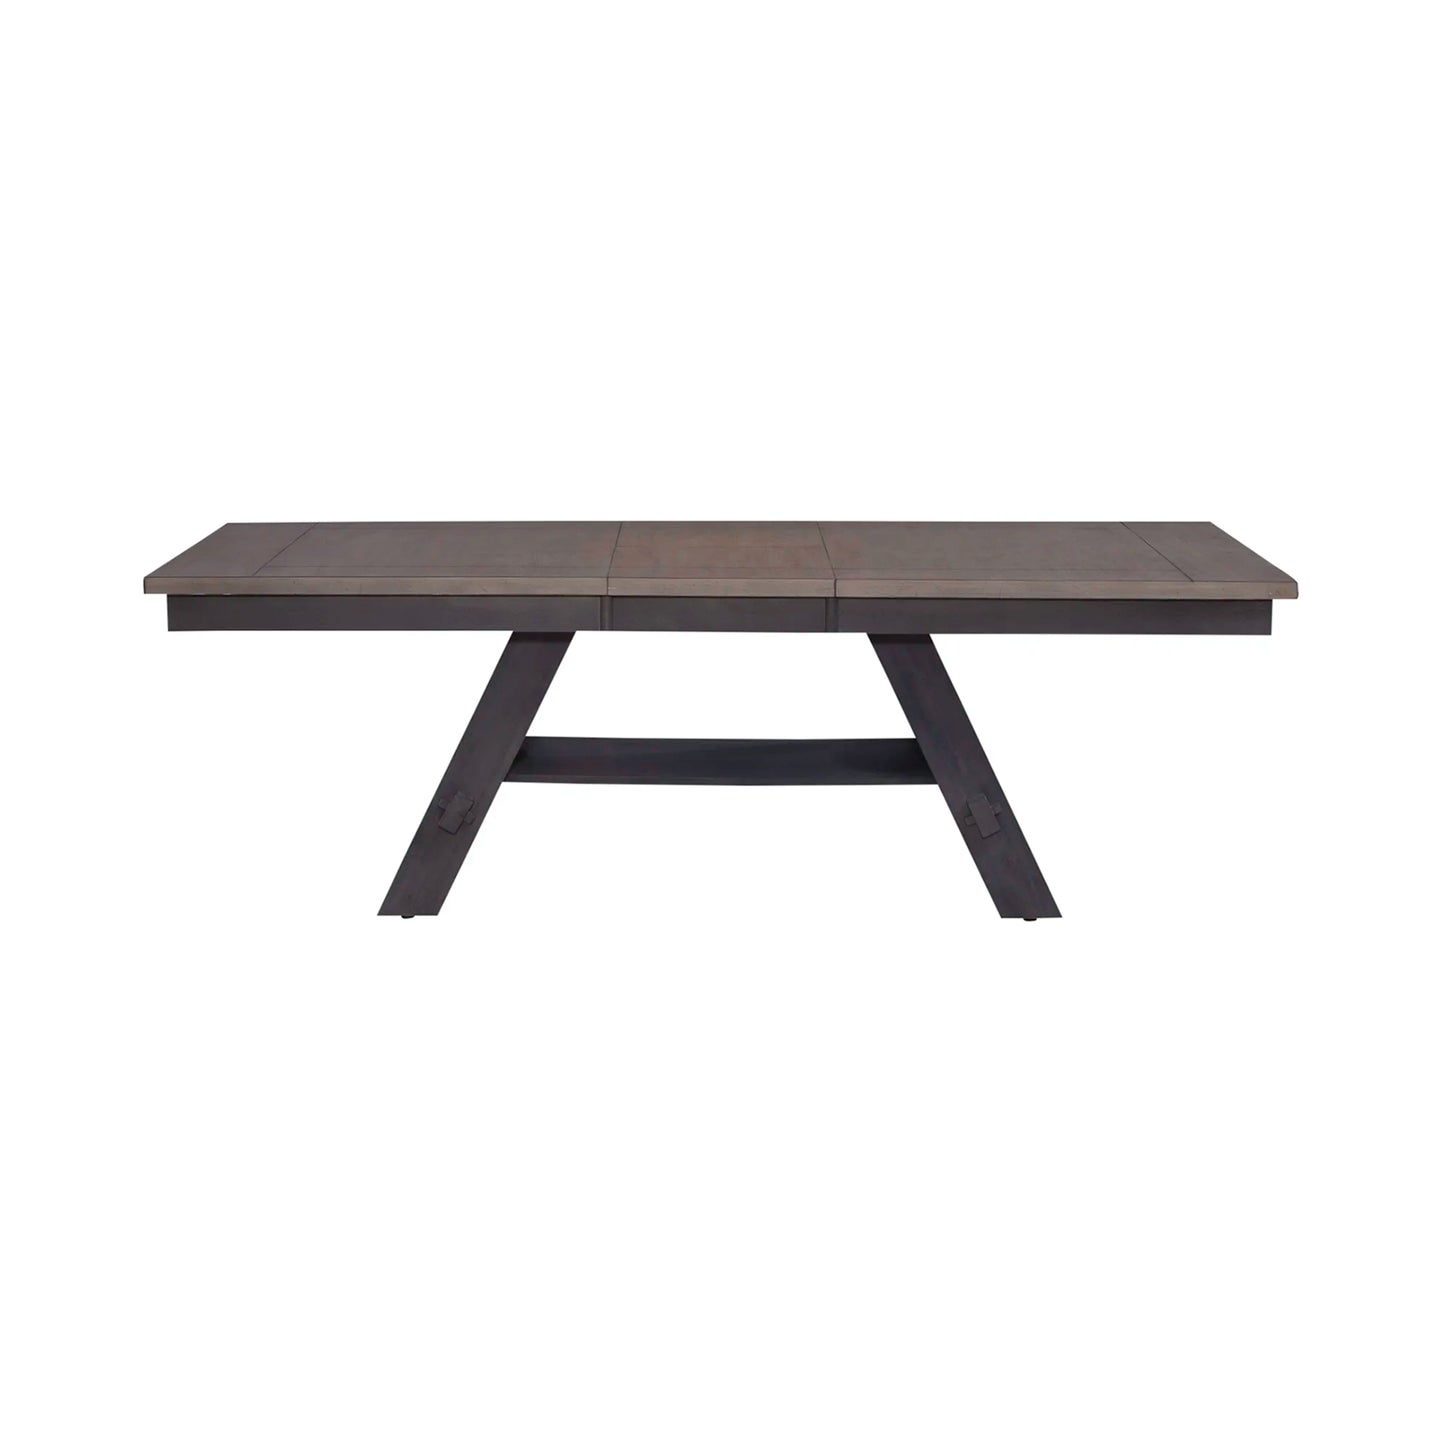 Lawson - Pedestal Table Set - Dark Gray 6